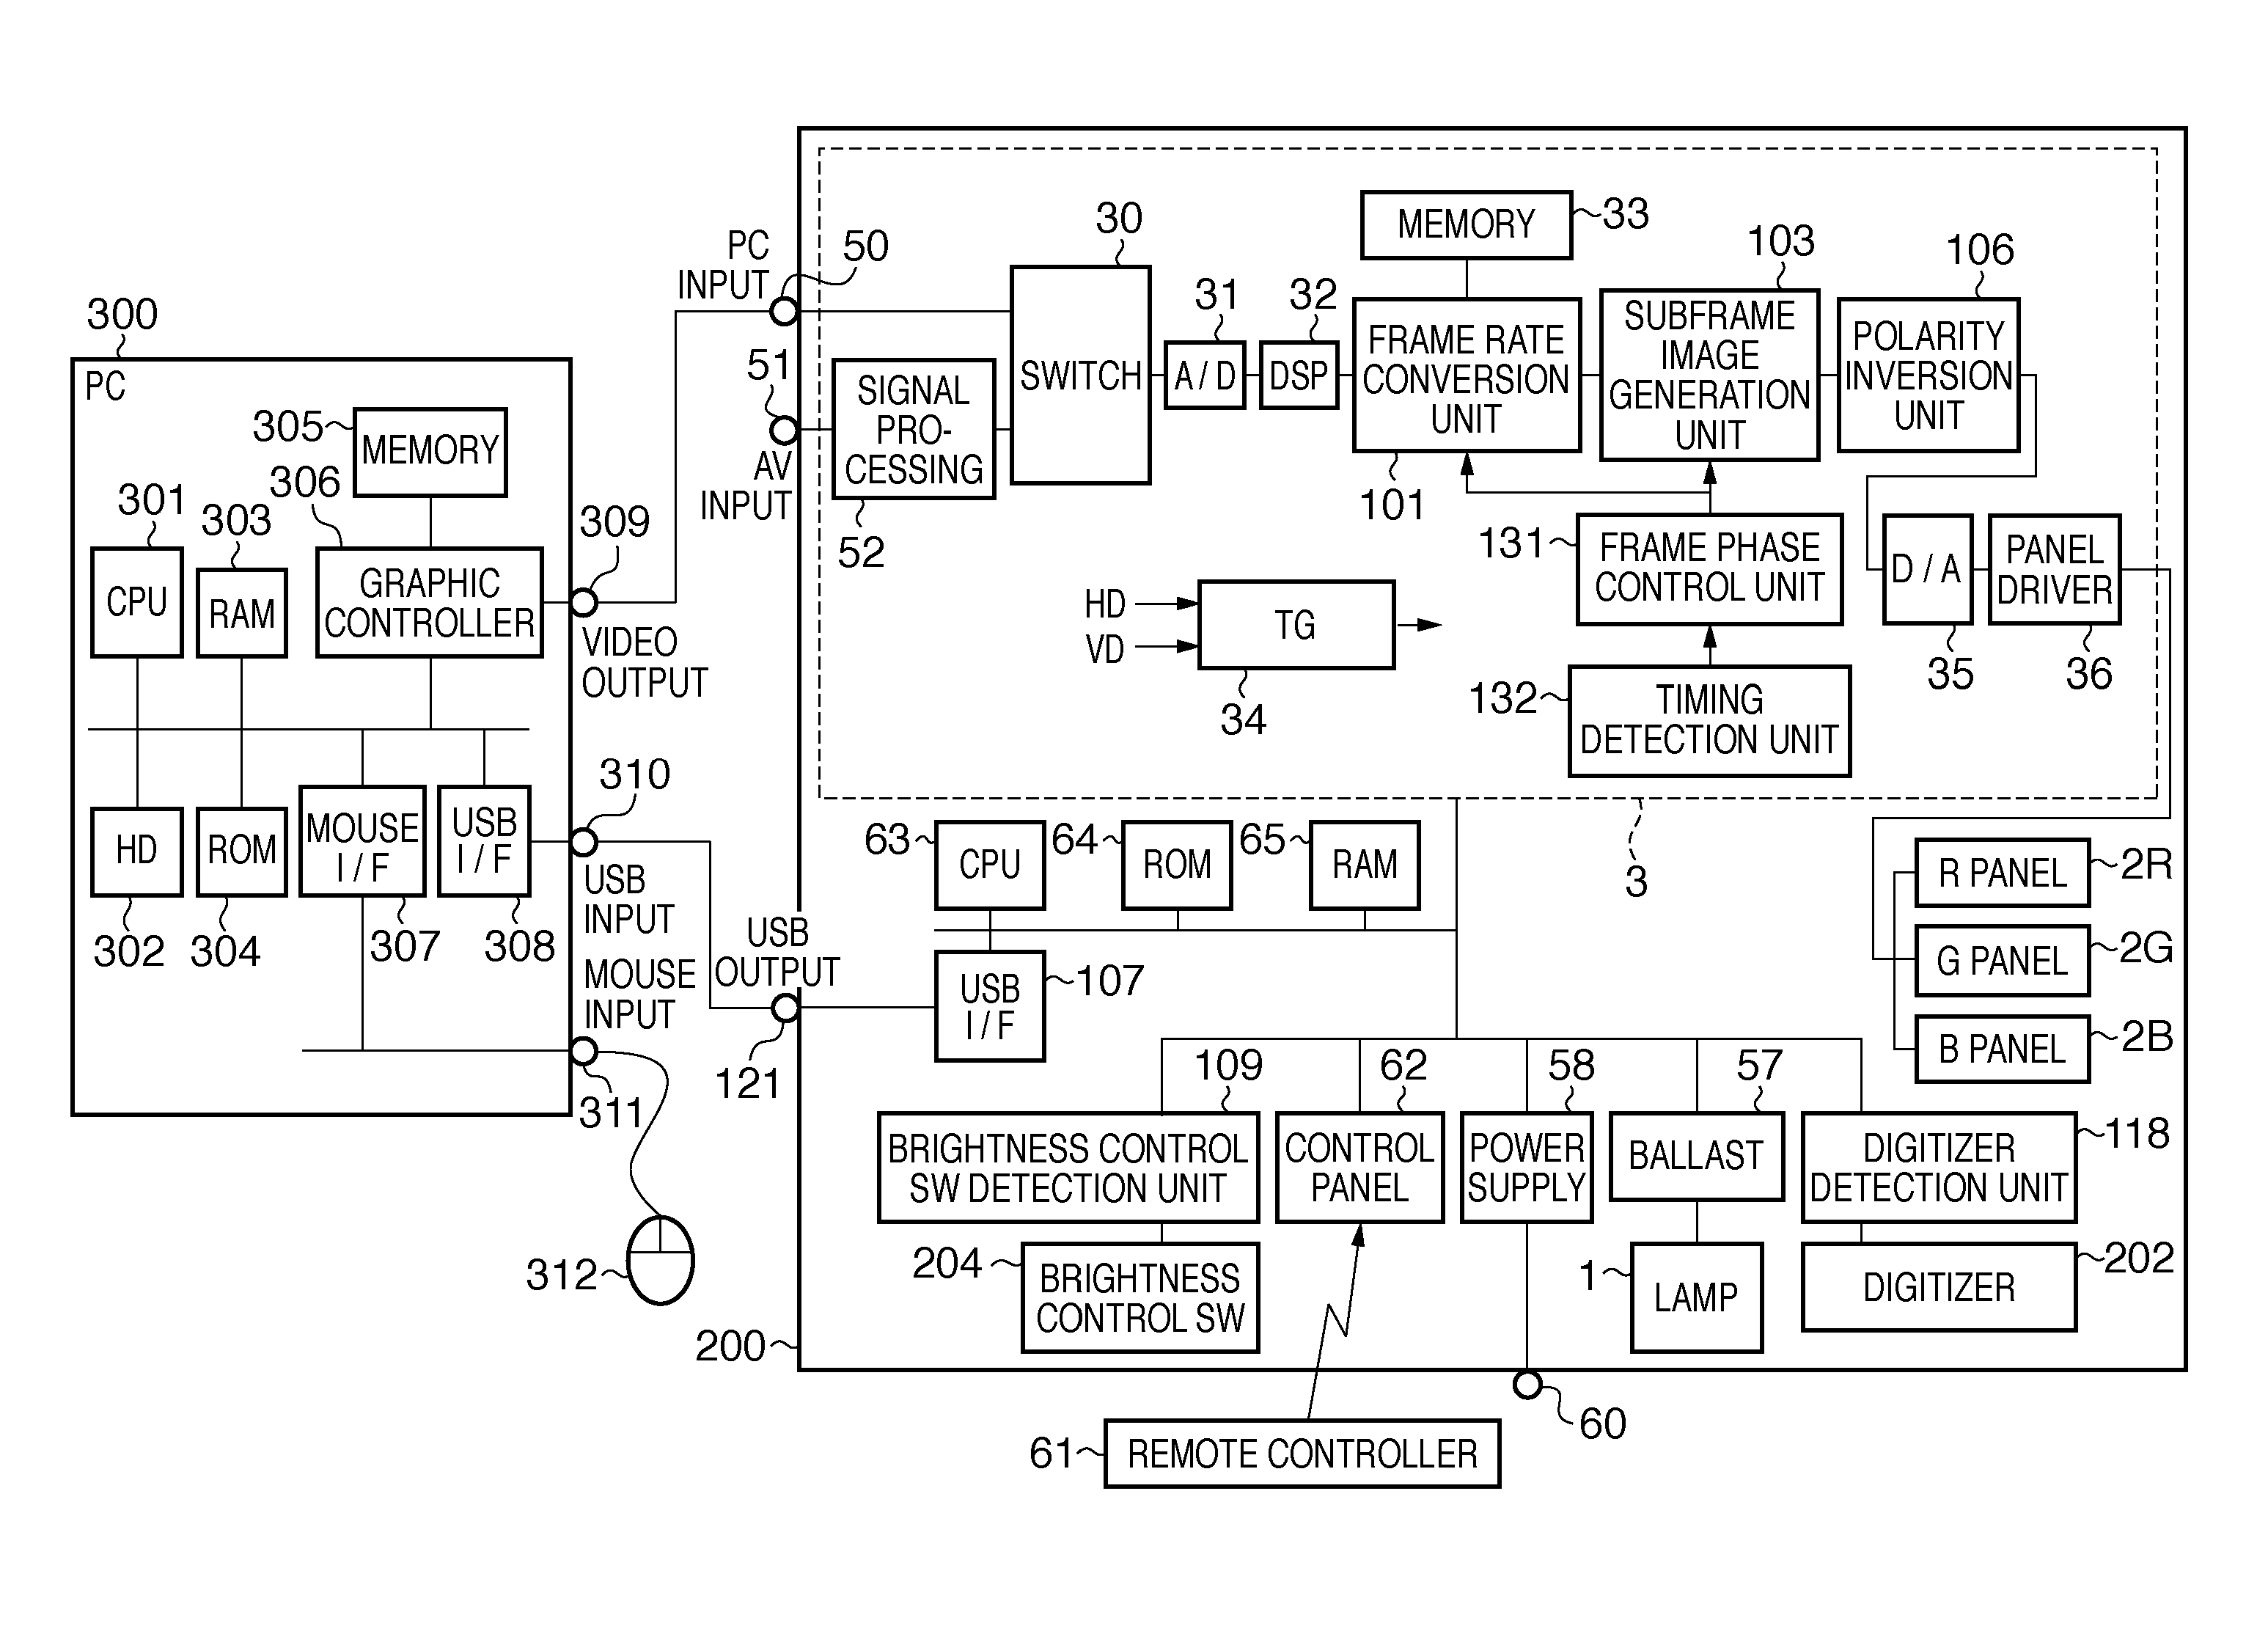 Image processing apparatus, method of controlling the same, computer program, and storage medium